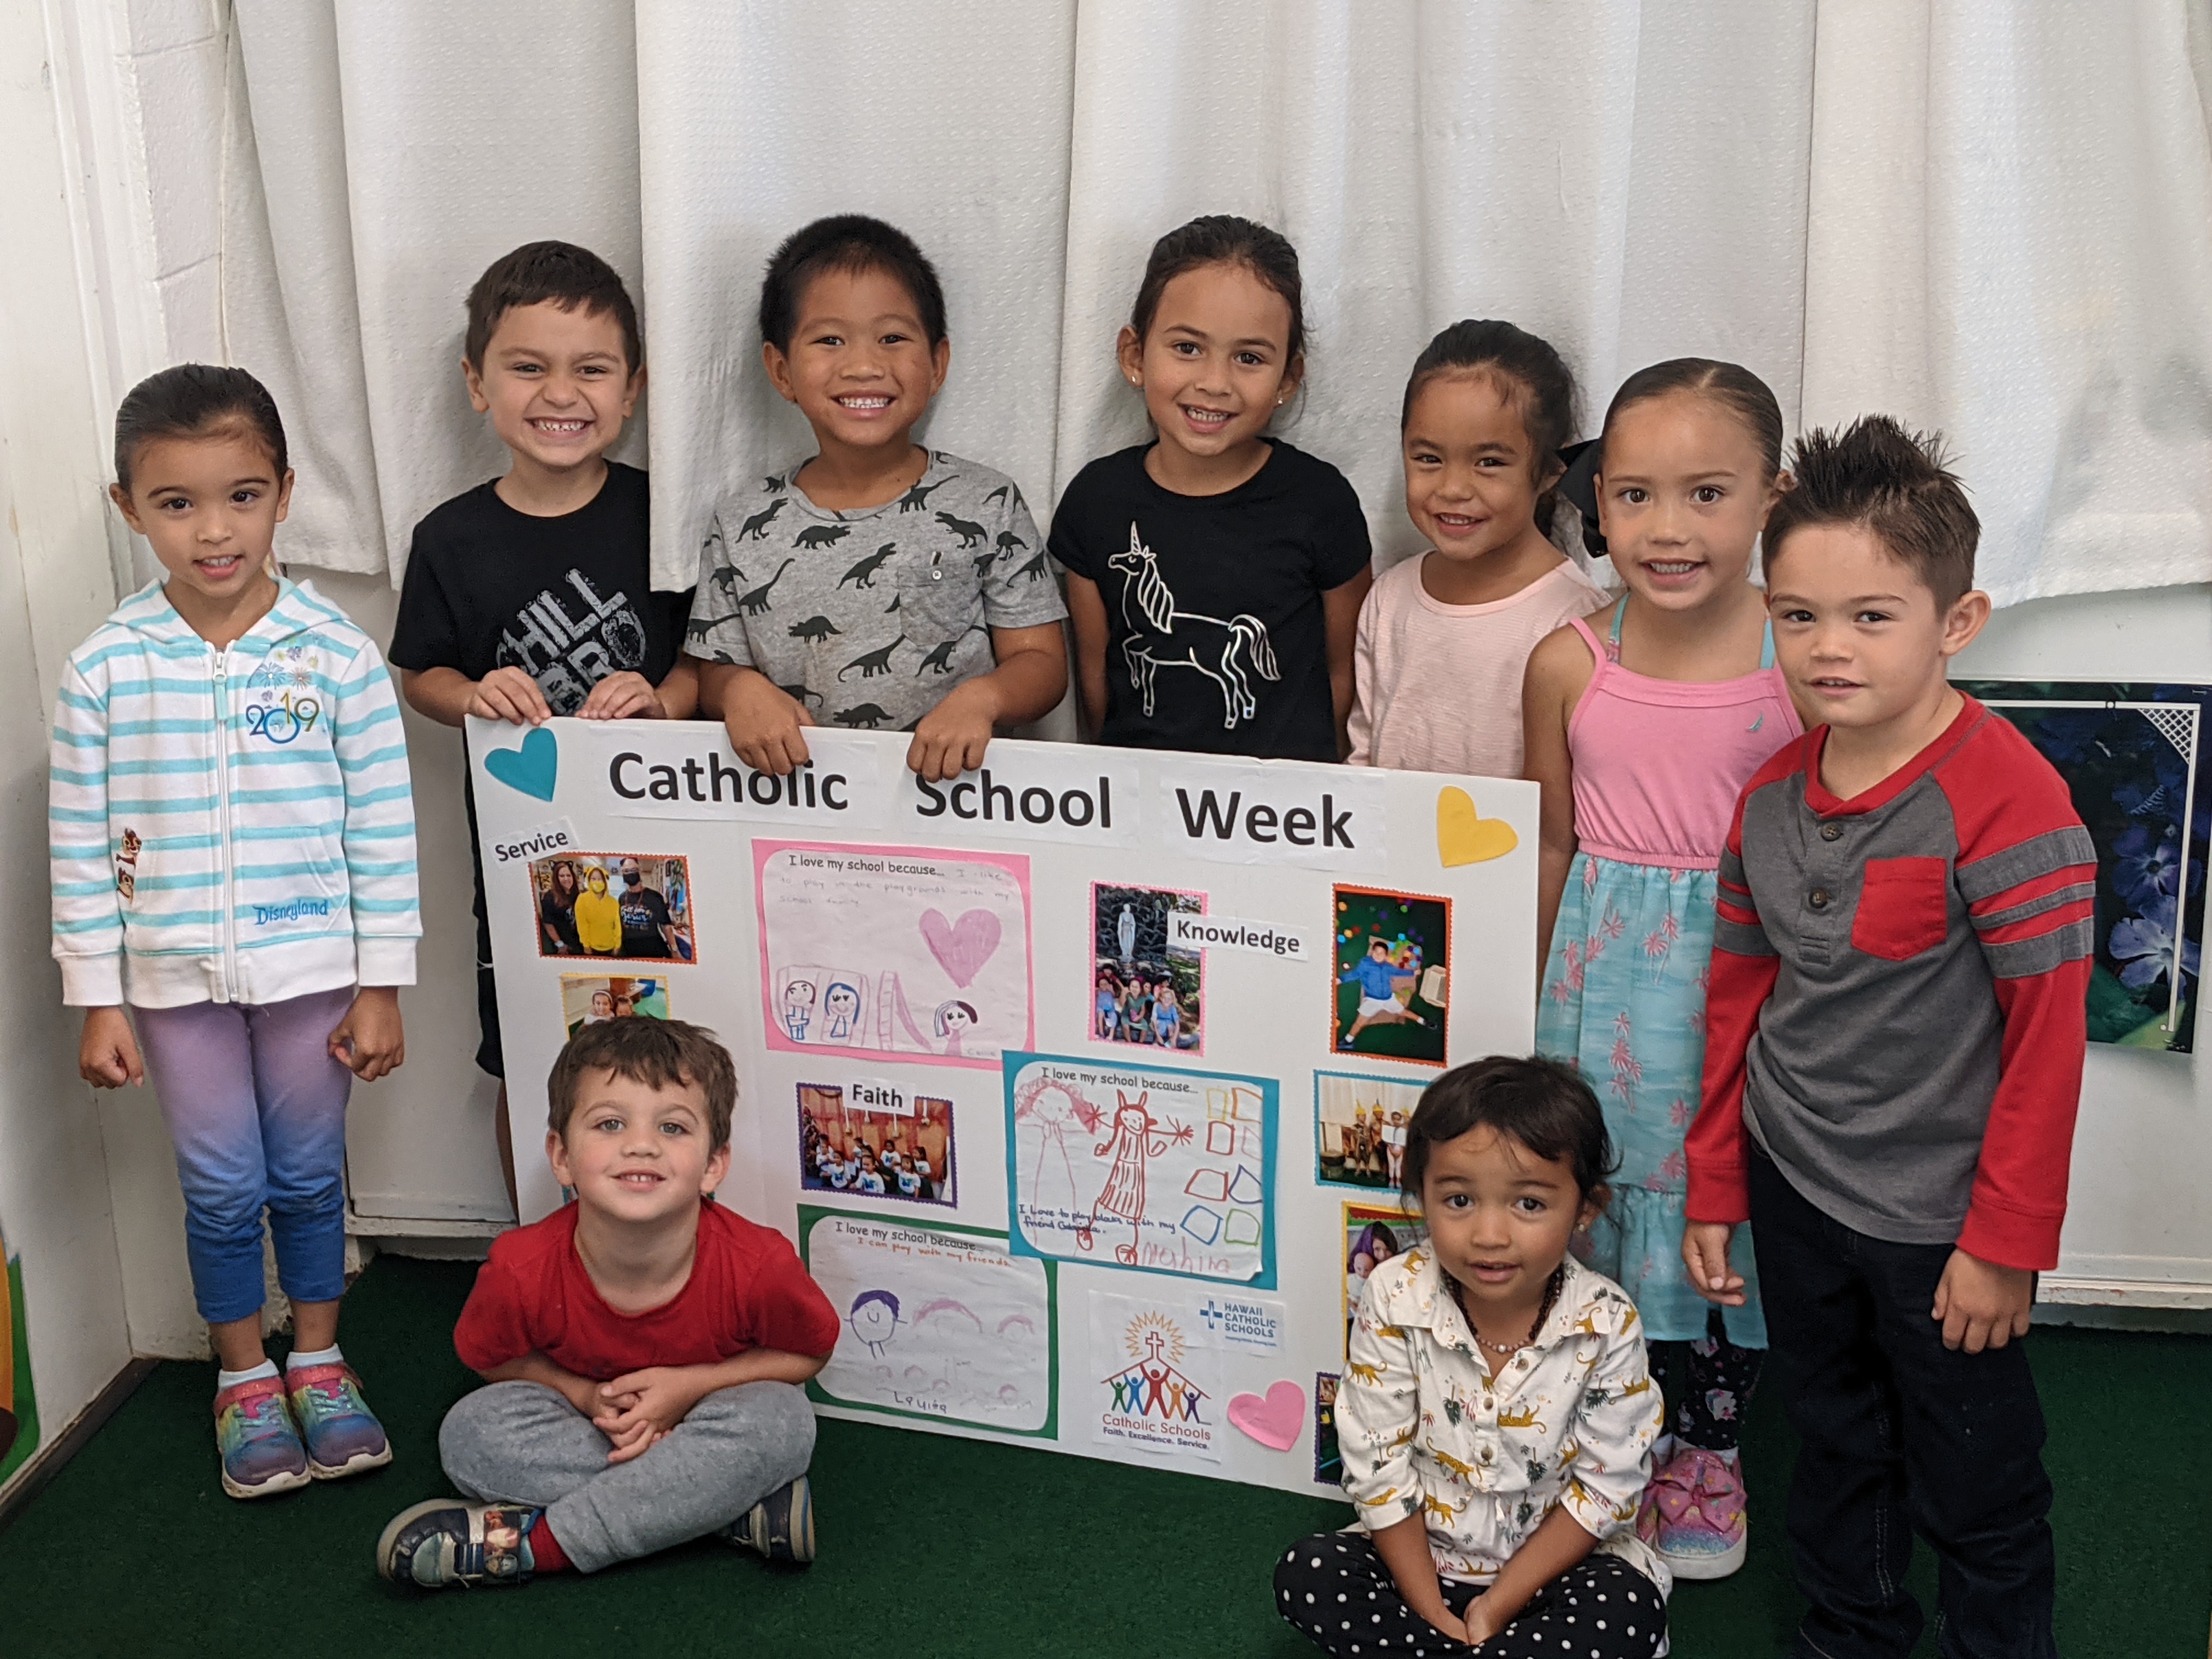 Children showing poster for Catcholic Schools Week